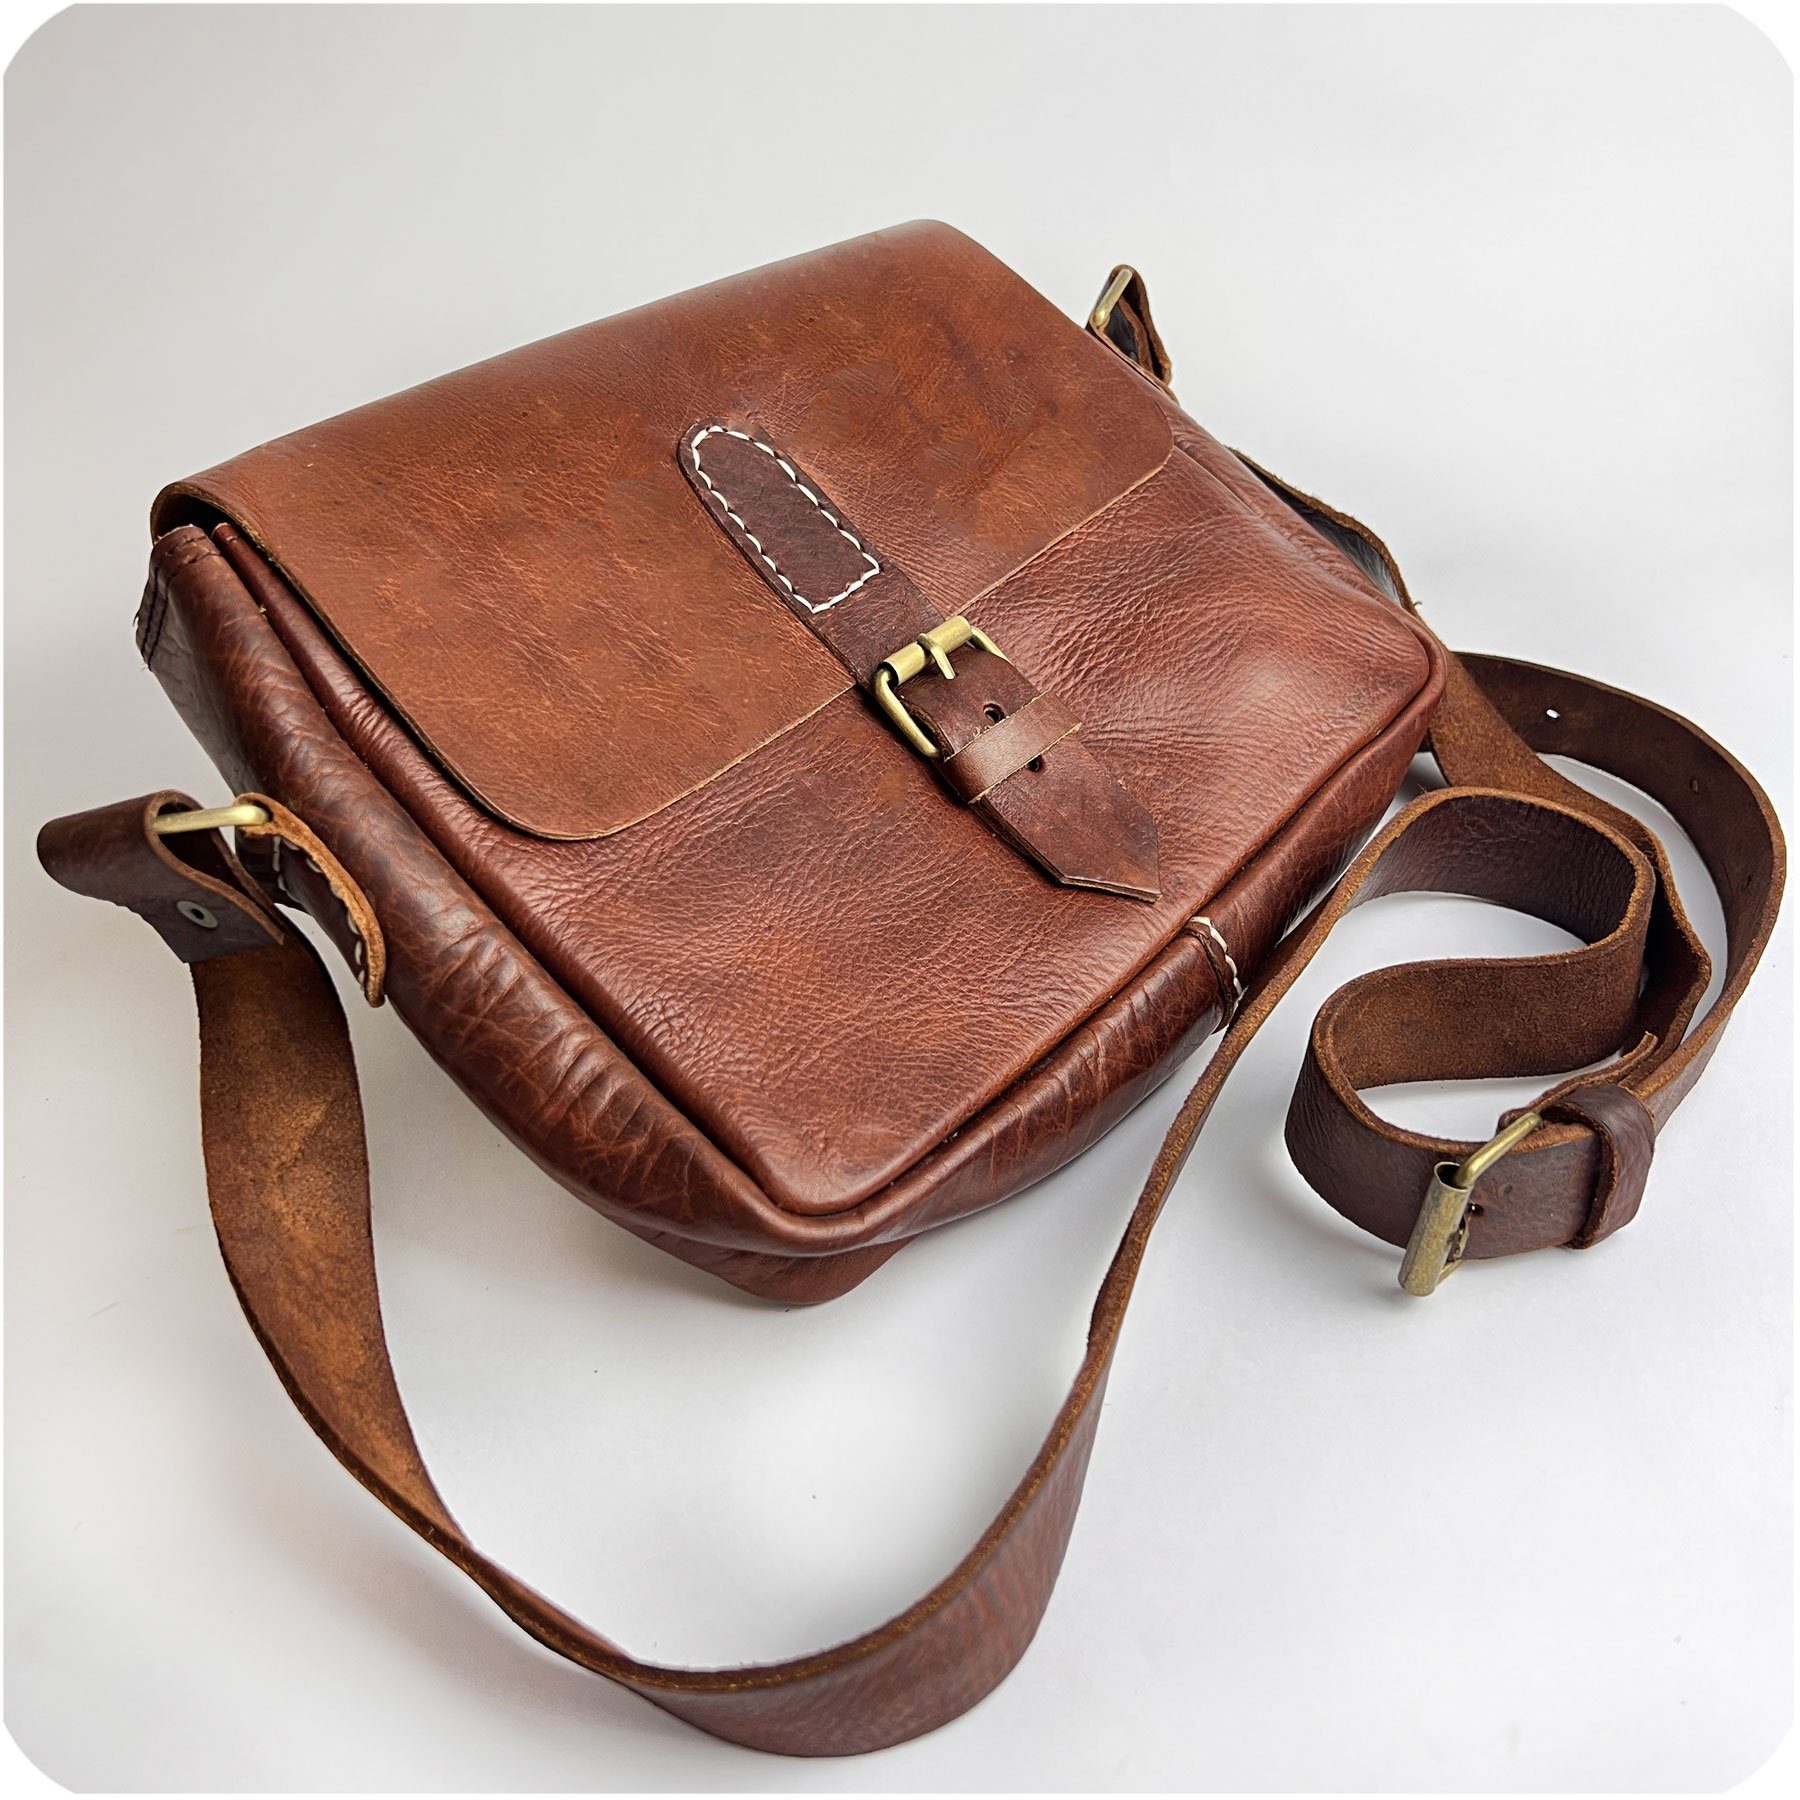 SIMANDRA Handtasche Leder-Handtasche Noura 20x23cm, elegante marokkanische Schultertasche Hellbraun